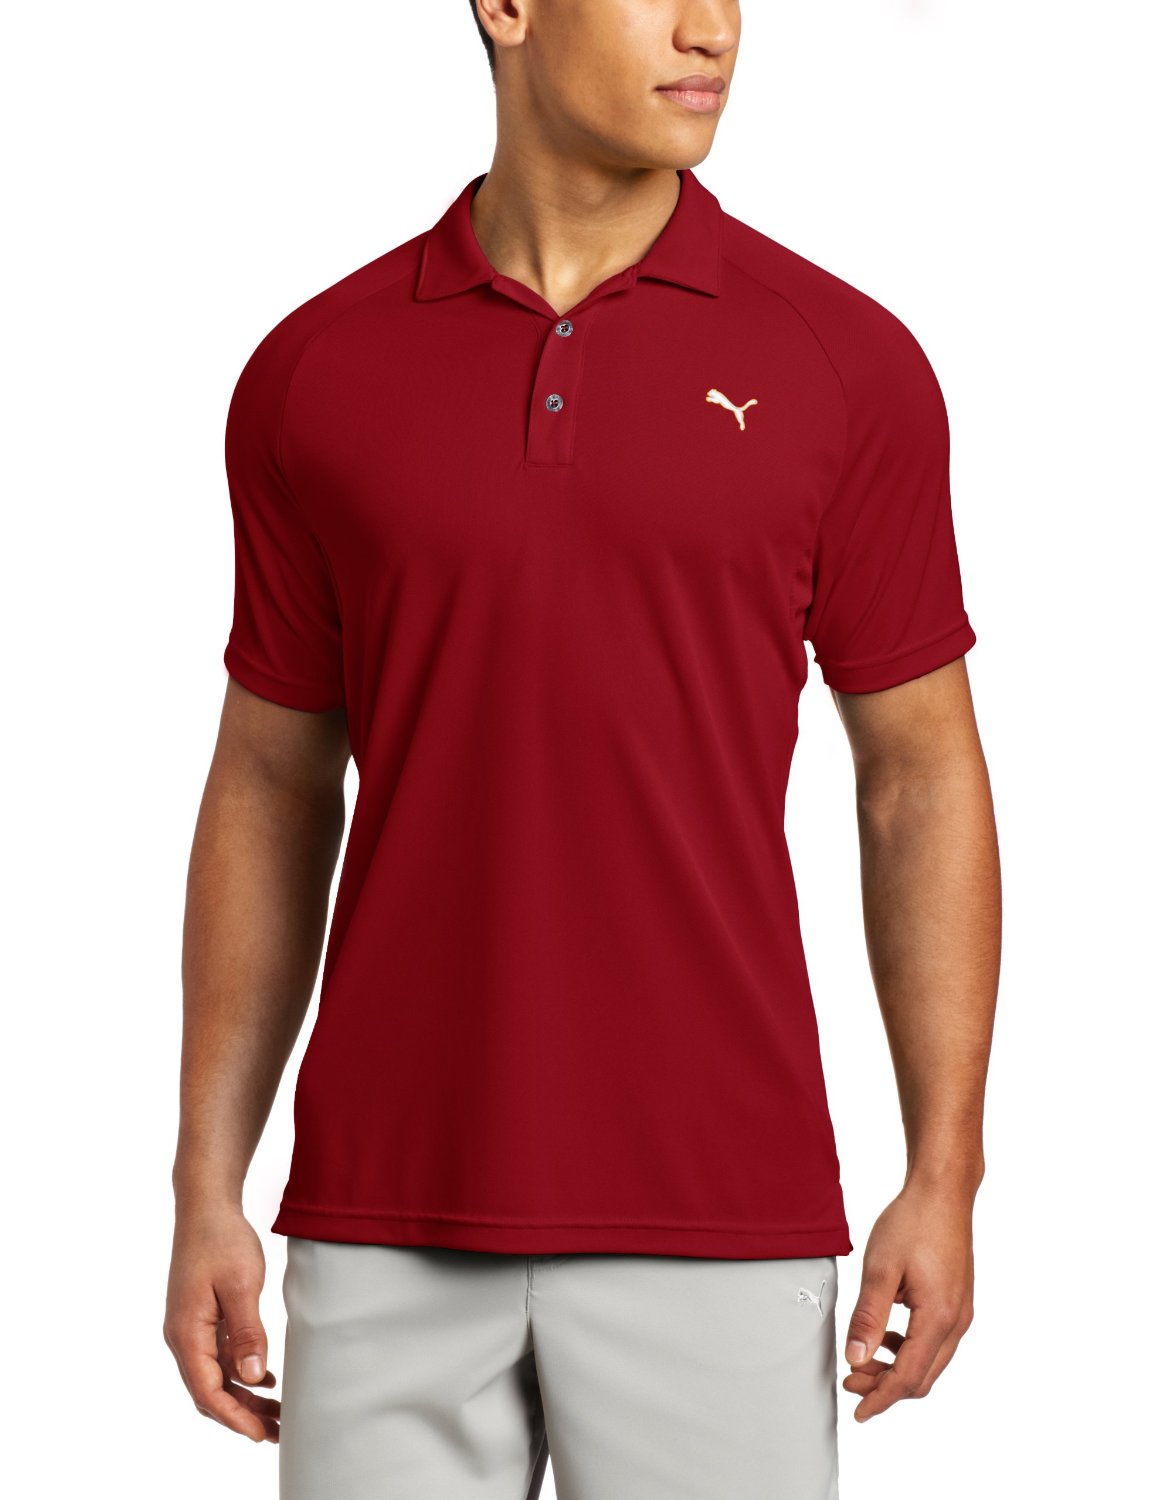 Puma Mens NA Raglan Tech Golf Shirts